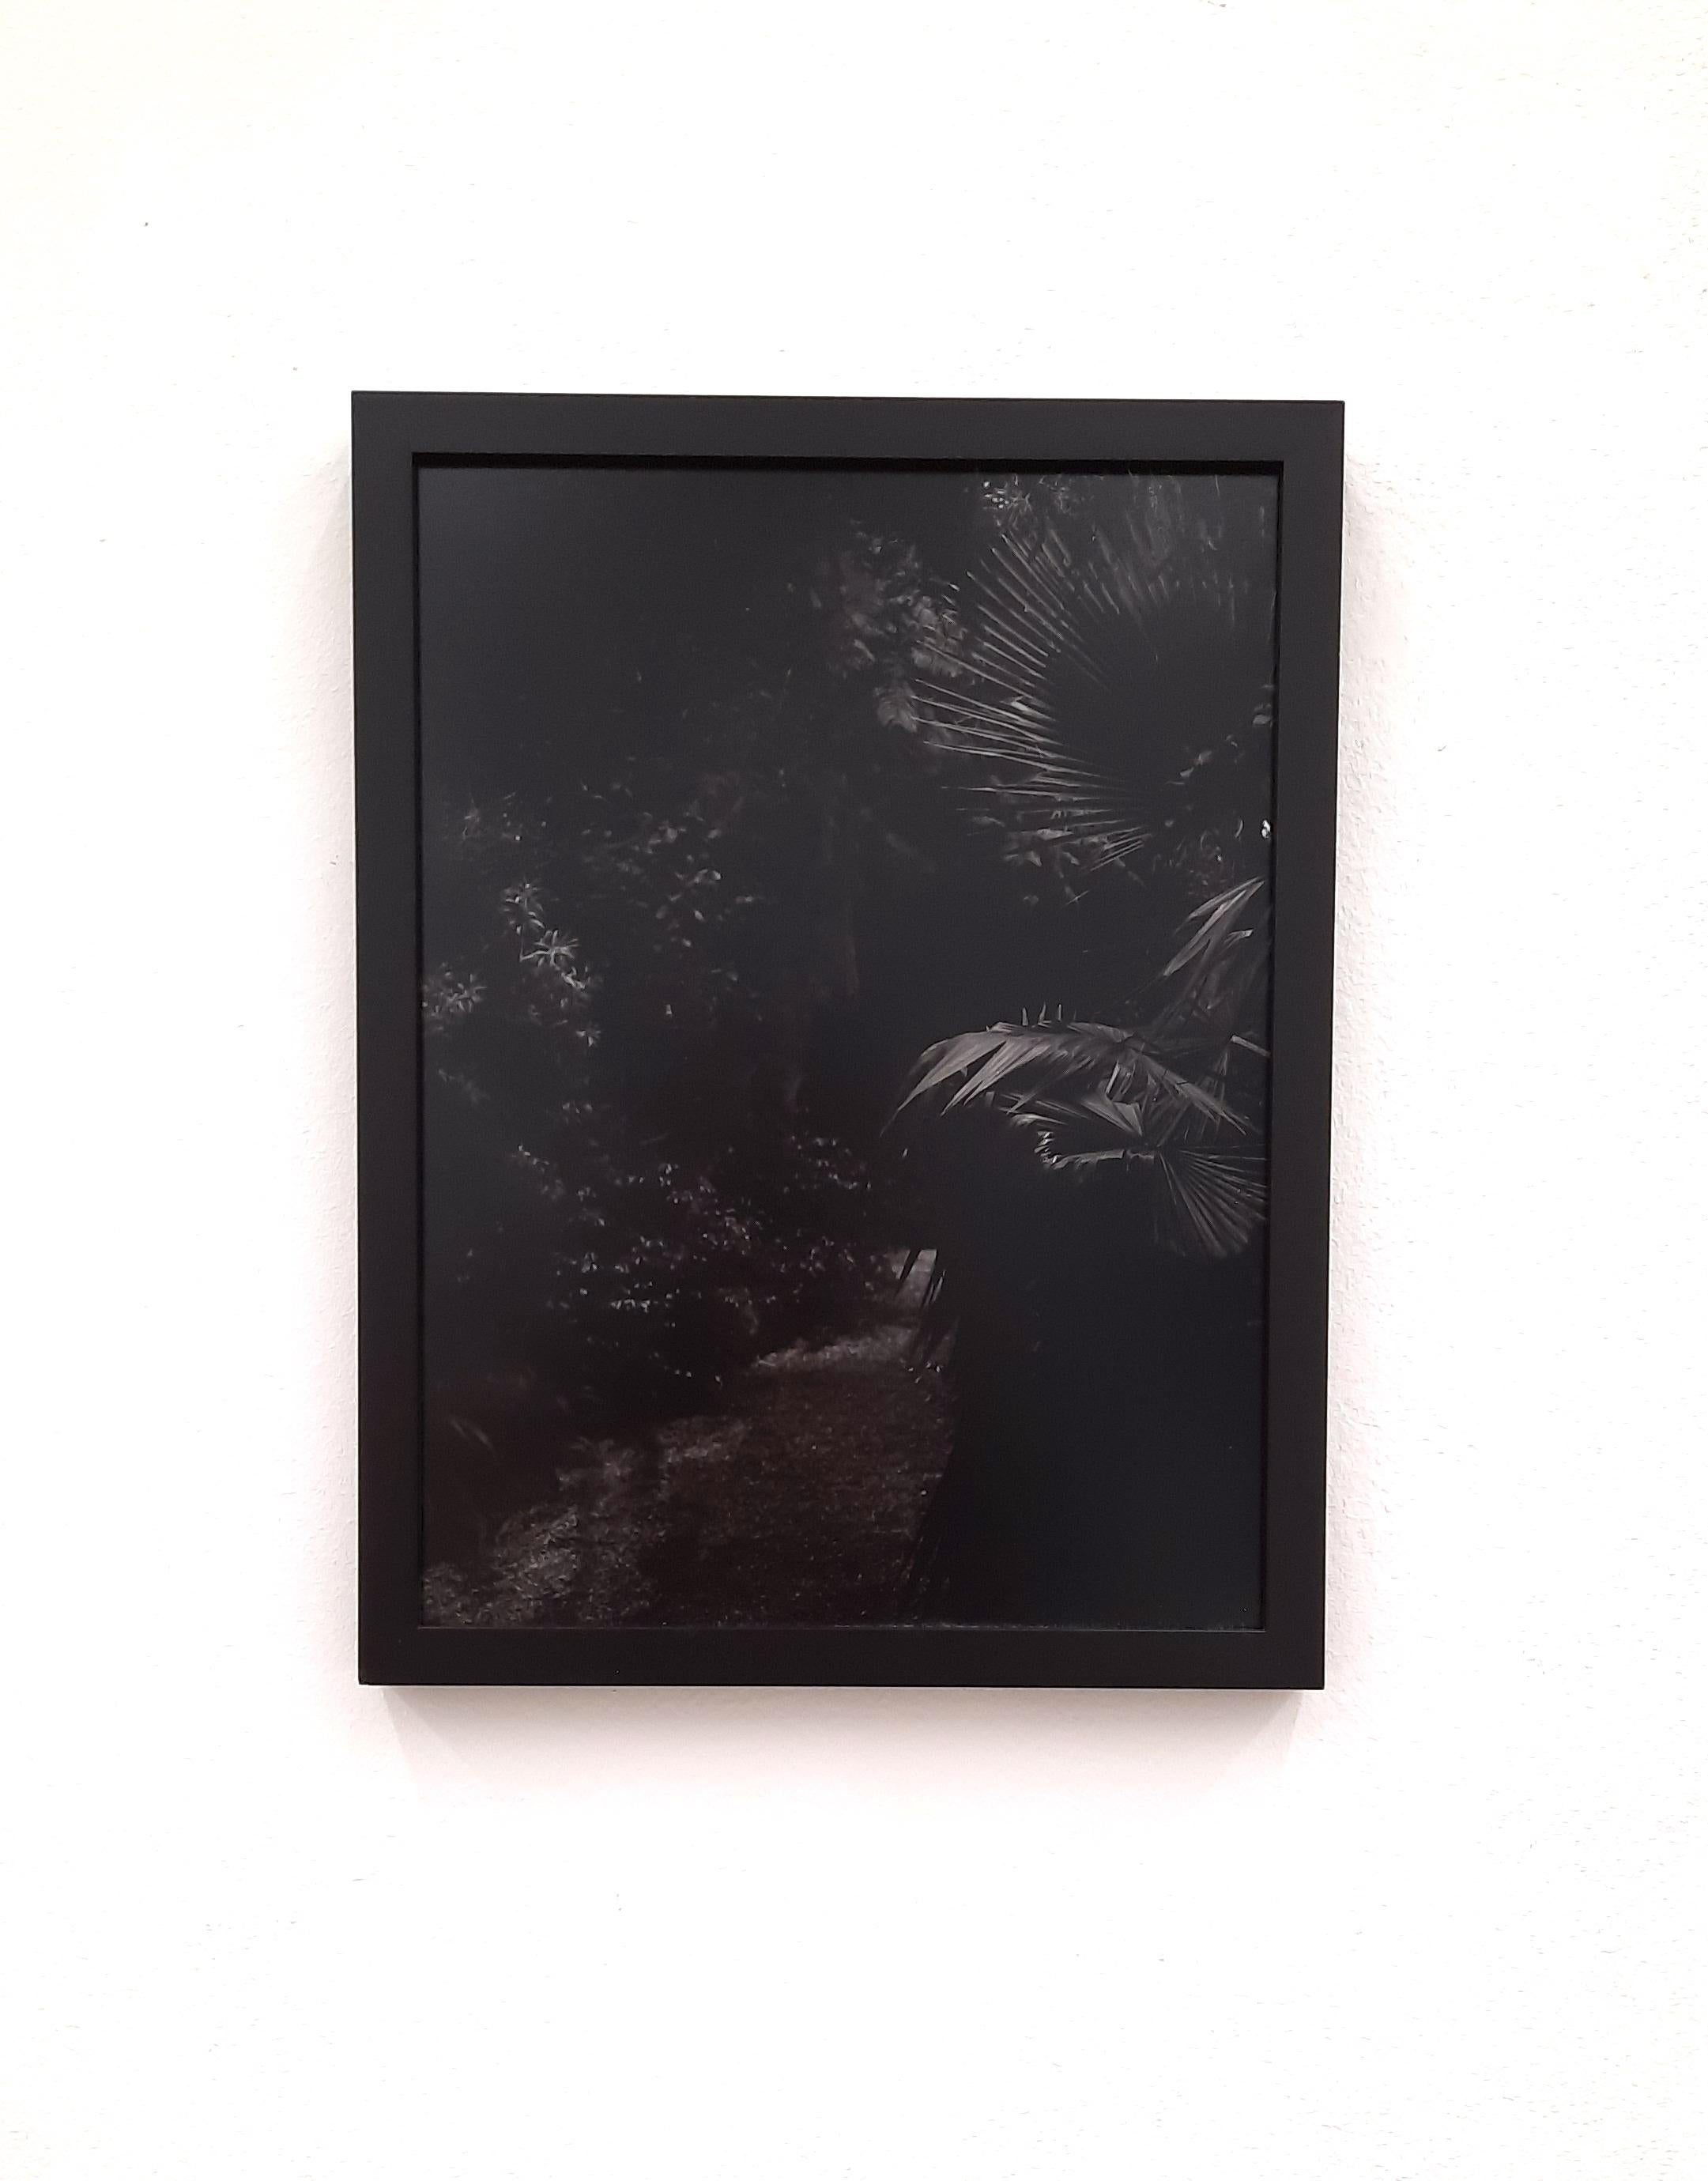 the haunting 3/3 - Contemporary Dark Landscape Photography (Schwarz), Black and White Photograph, von Tina Ribarits